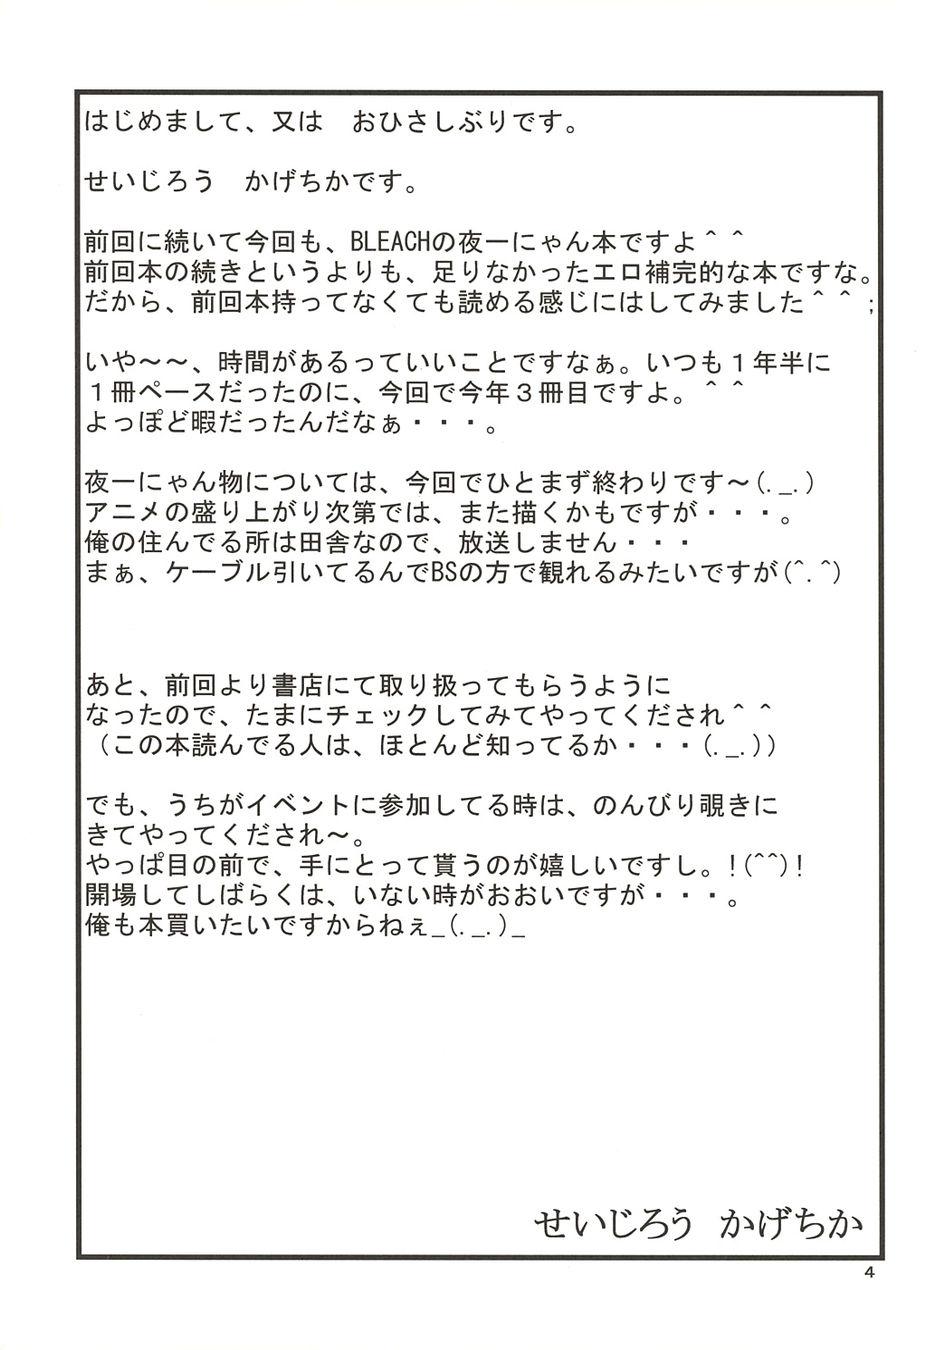 18 Year Old Yoruichi Nyan no Hon 2 - Bleach Tetas - Page 4